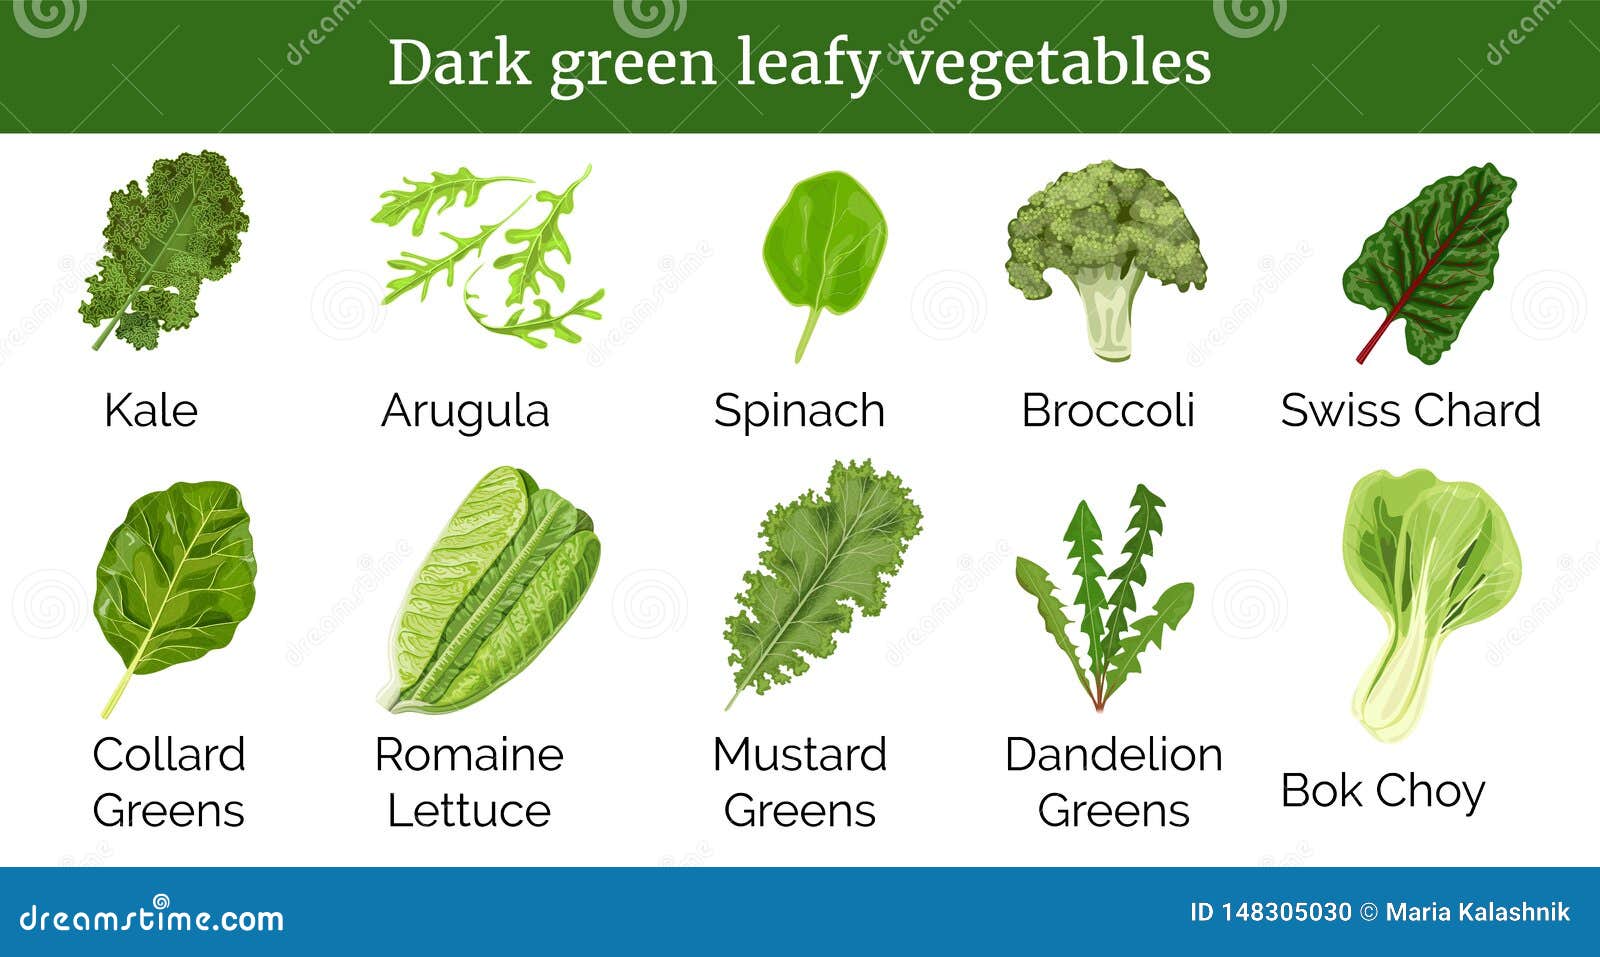 dark green leafy vegetables, herbs. spinach, dandelion green, broccoli, mustard, romaine lettuce, kale, collard.